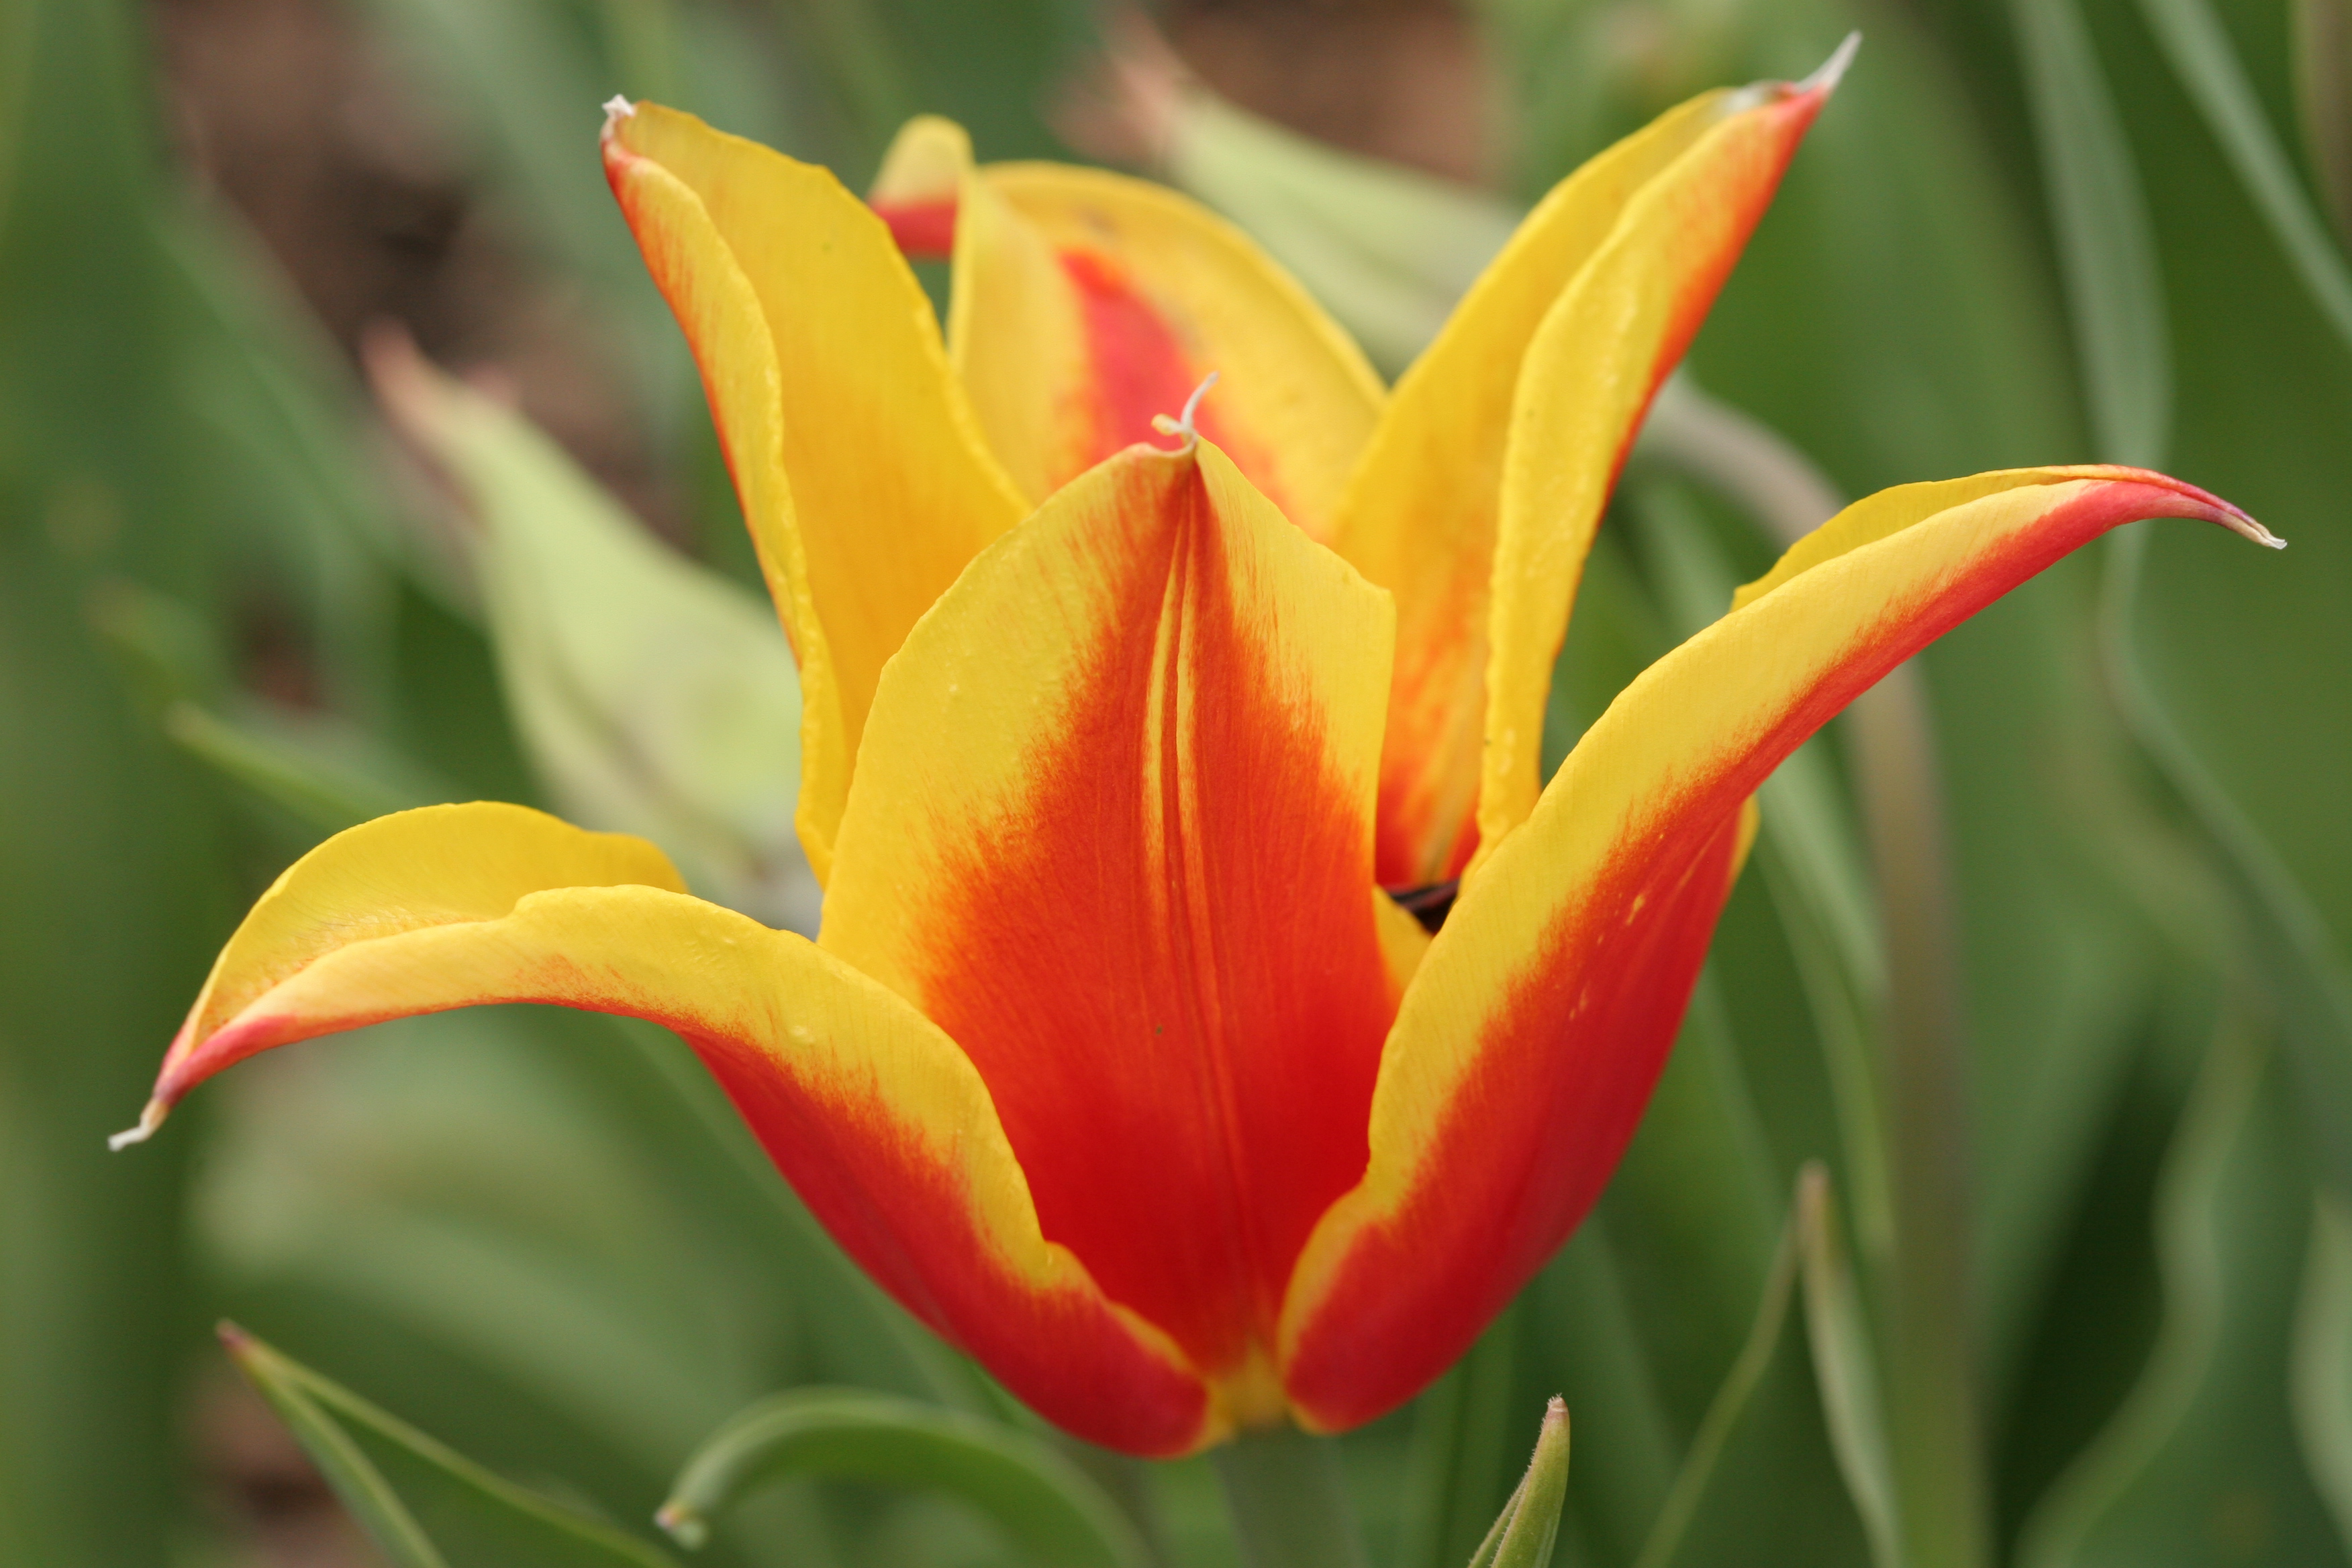 File:Kentucky tulip blooming.jpg - Wikimedia Commons